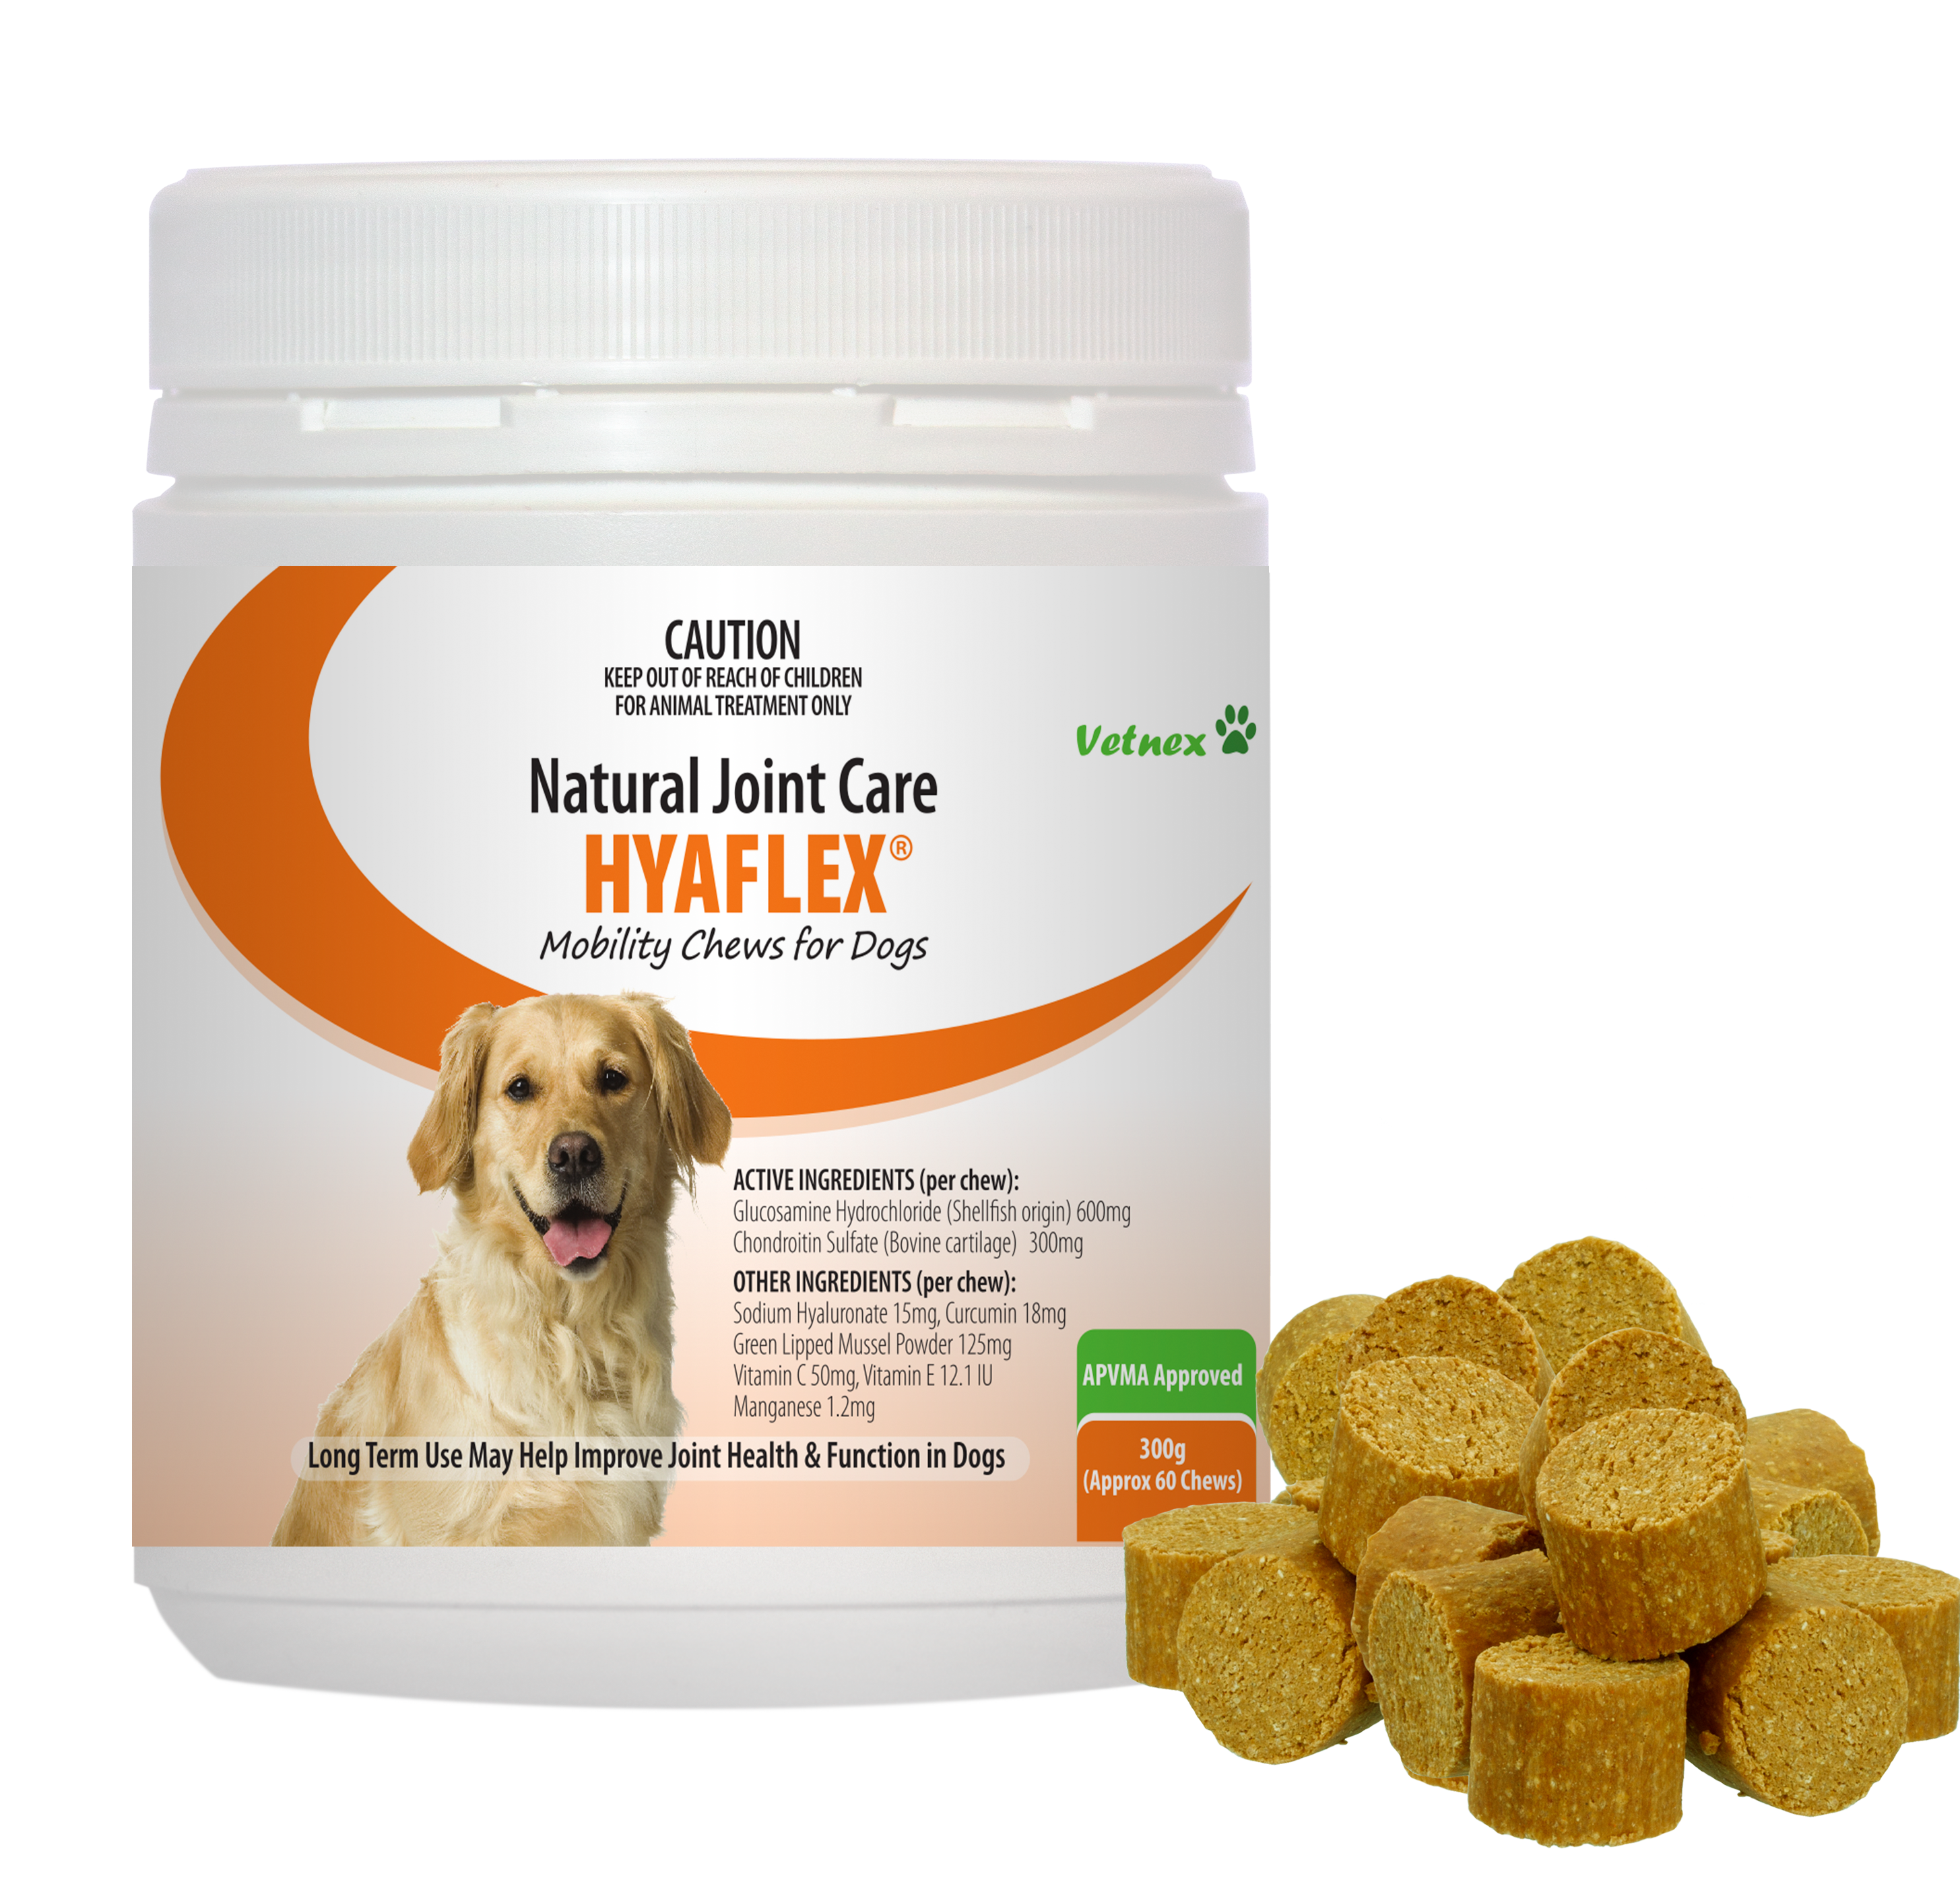 Vetnex Hyaflex Mobility Chews for Dogs 300g/60 chews